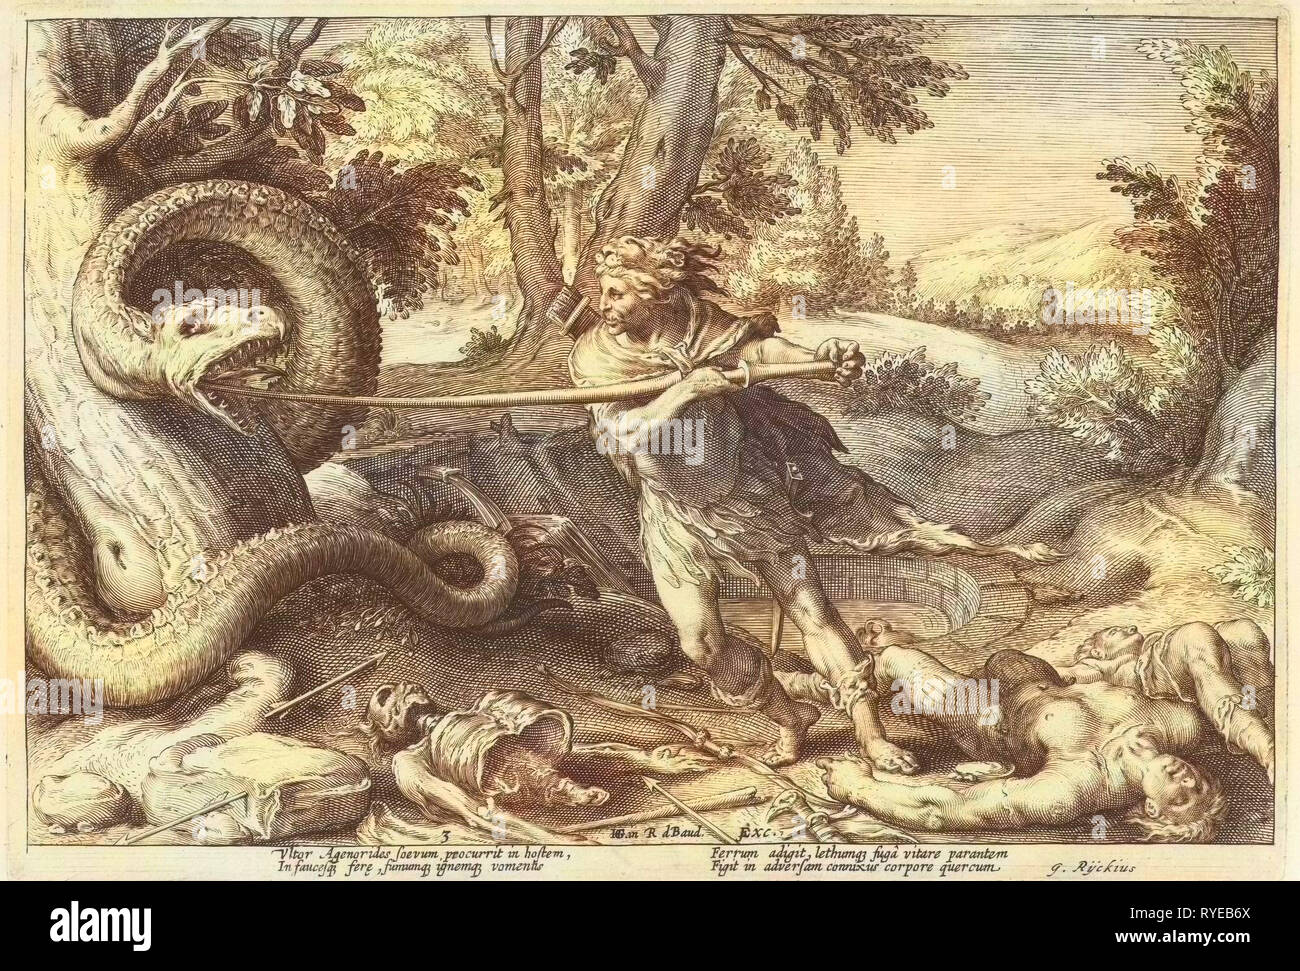 Cadmus kills the dragon, G. Rijckius, Robert de Baudous, 1615 Stock Photo